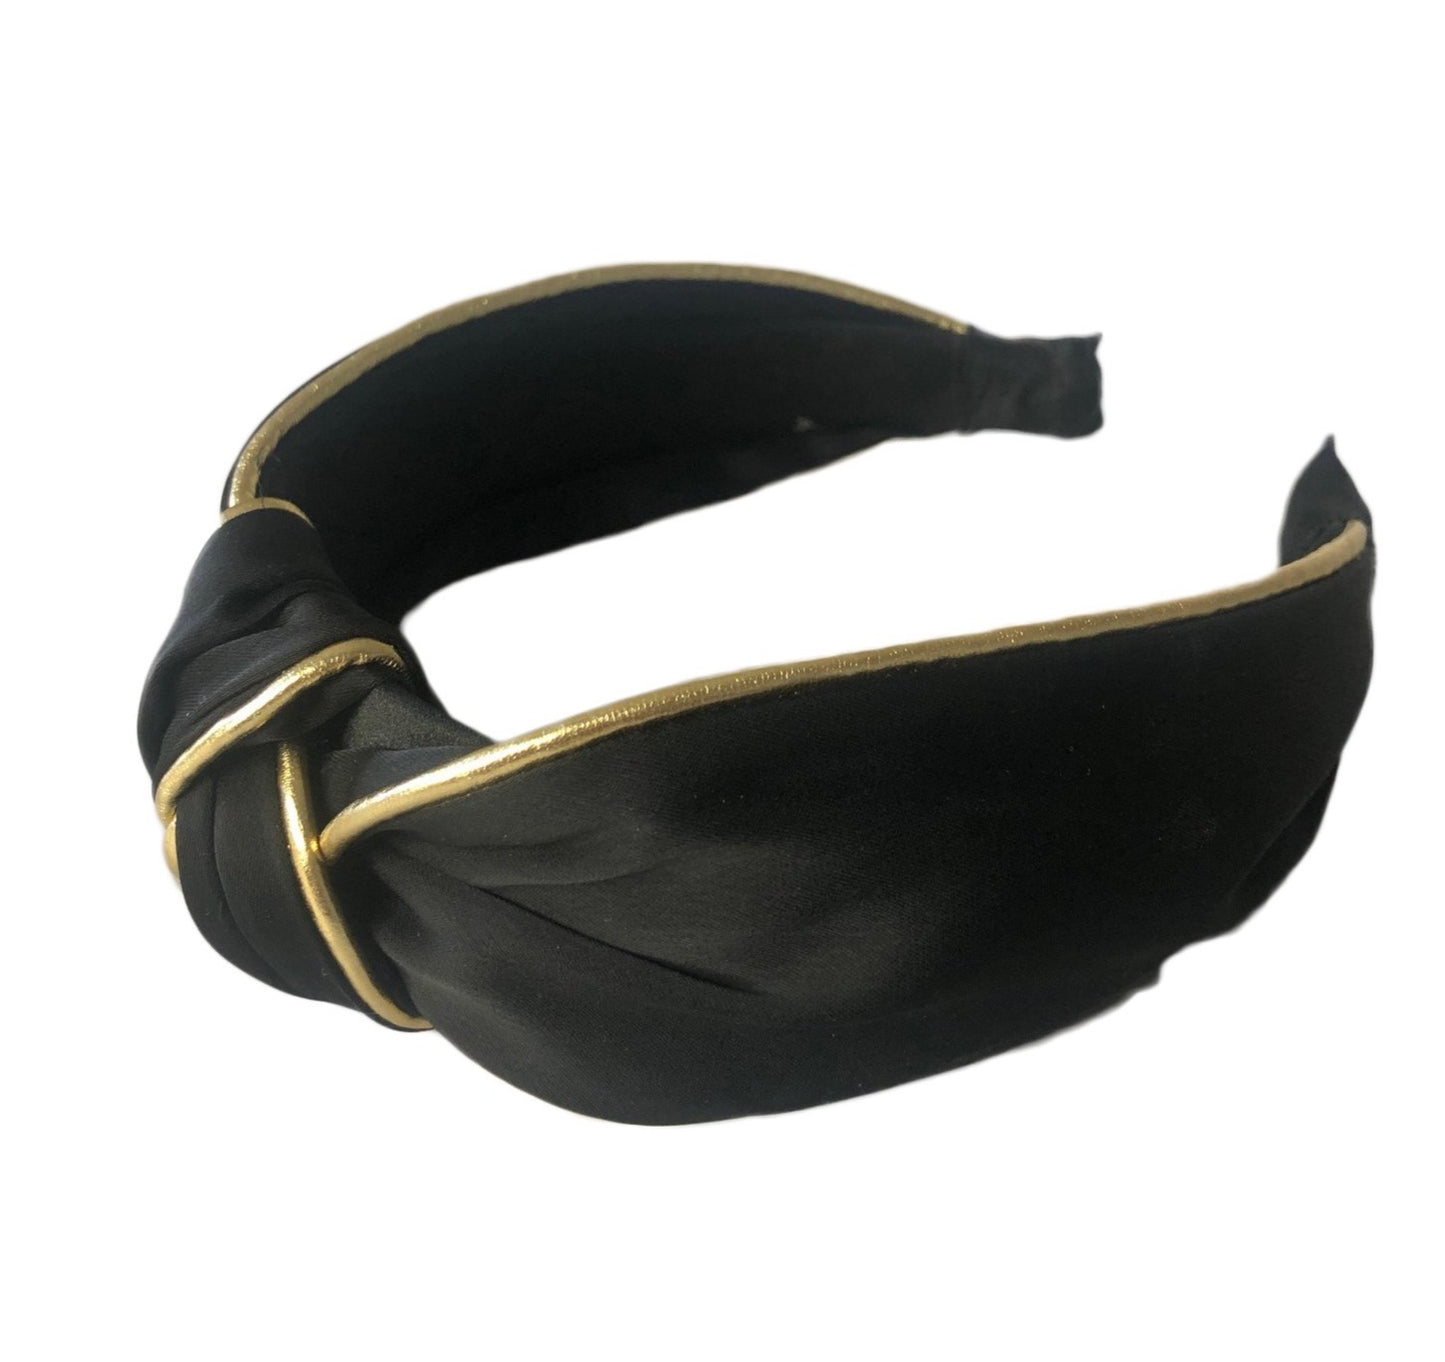 Black Knotted Headband